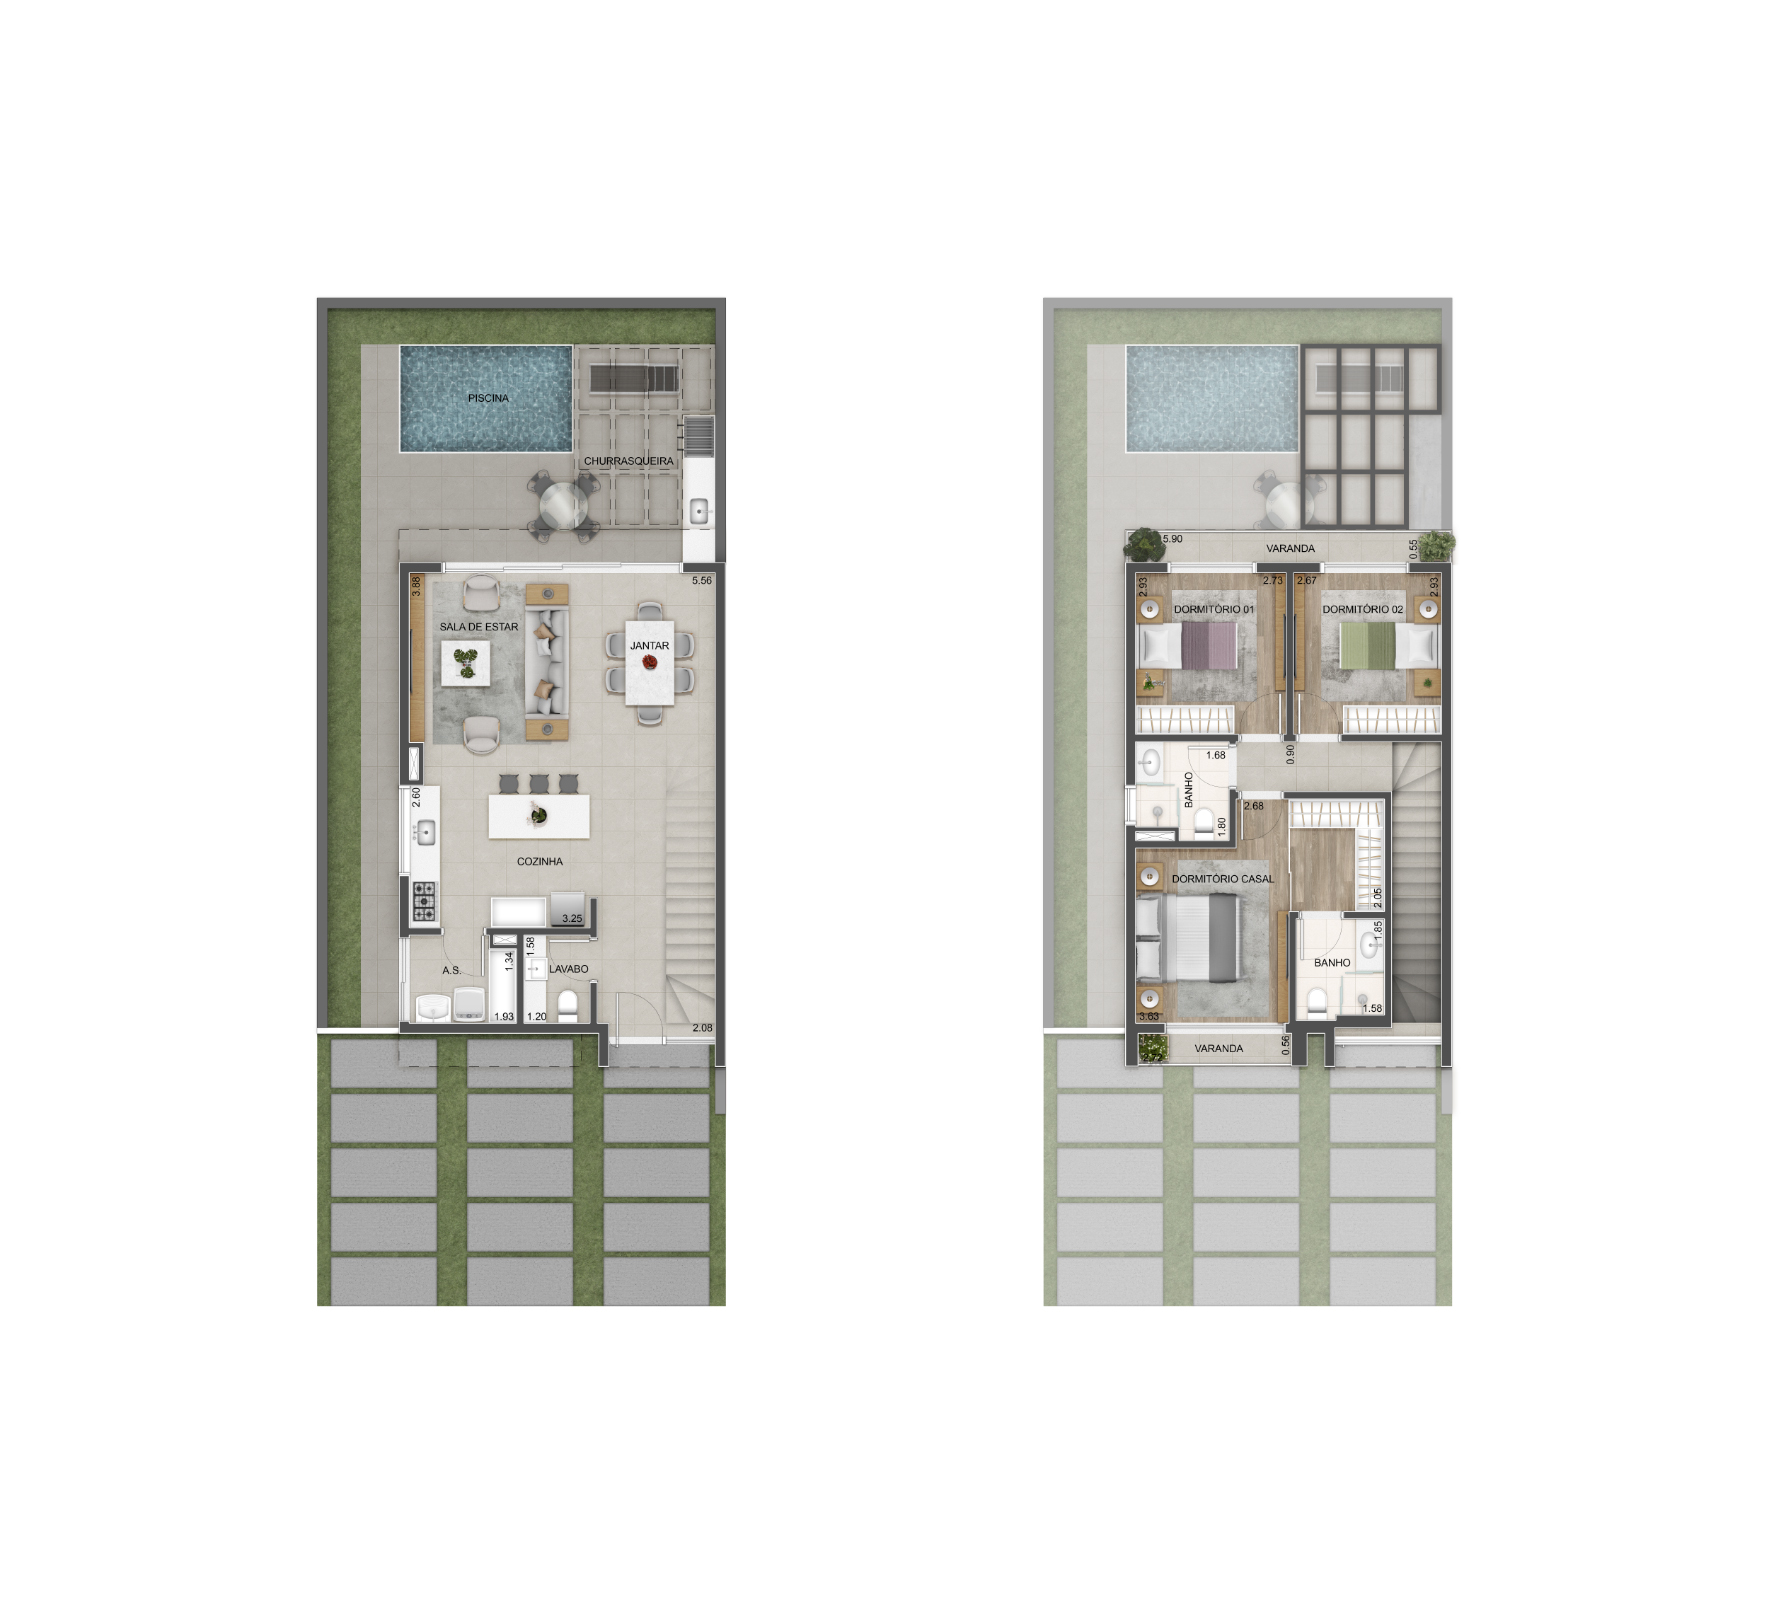 Ekko Live Granja Viana – Casas de 3 dormitórios, duplex e triplex